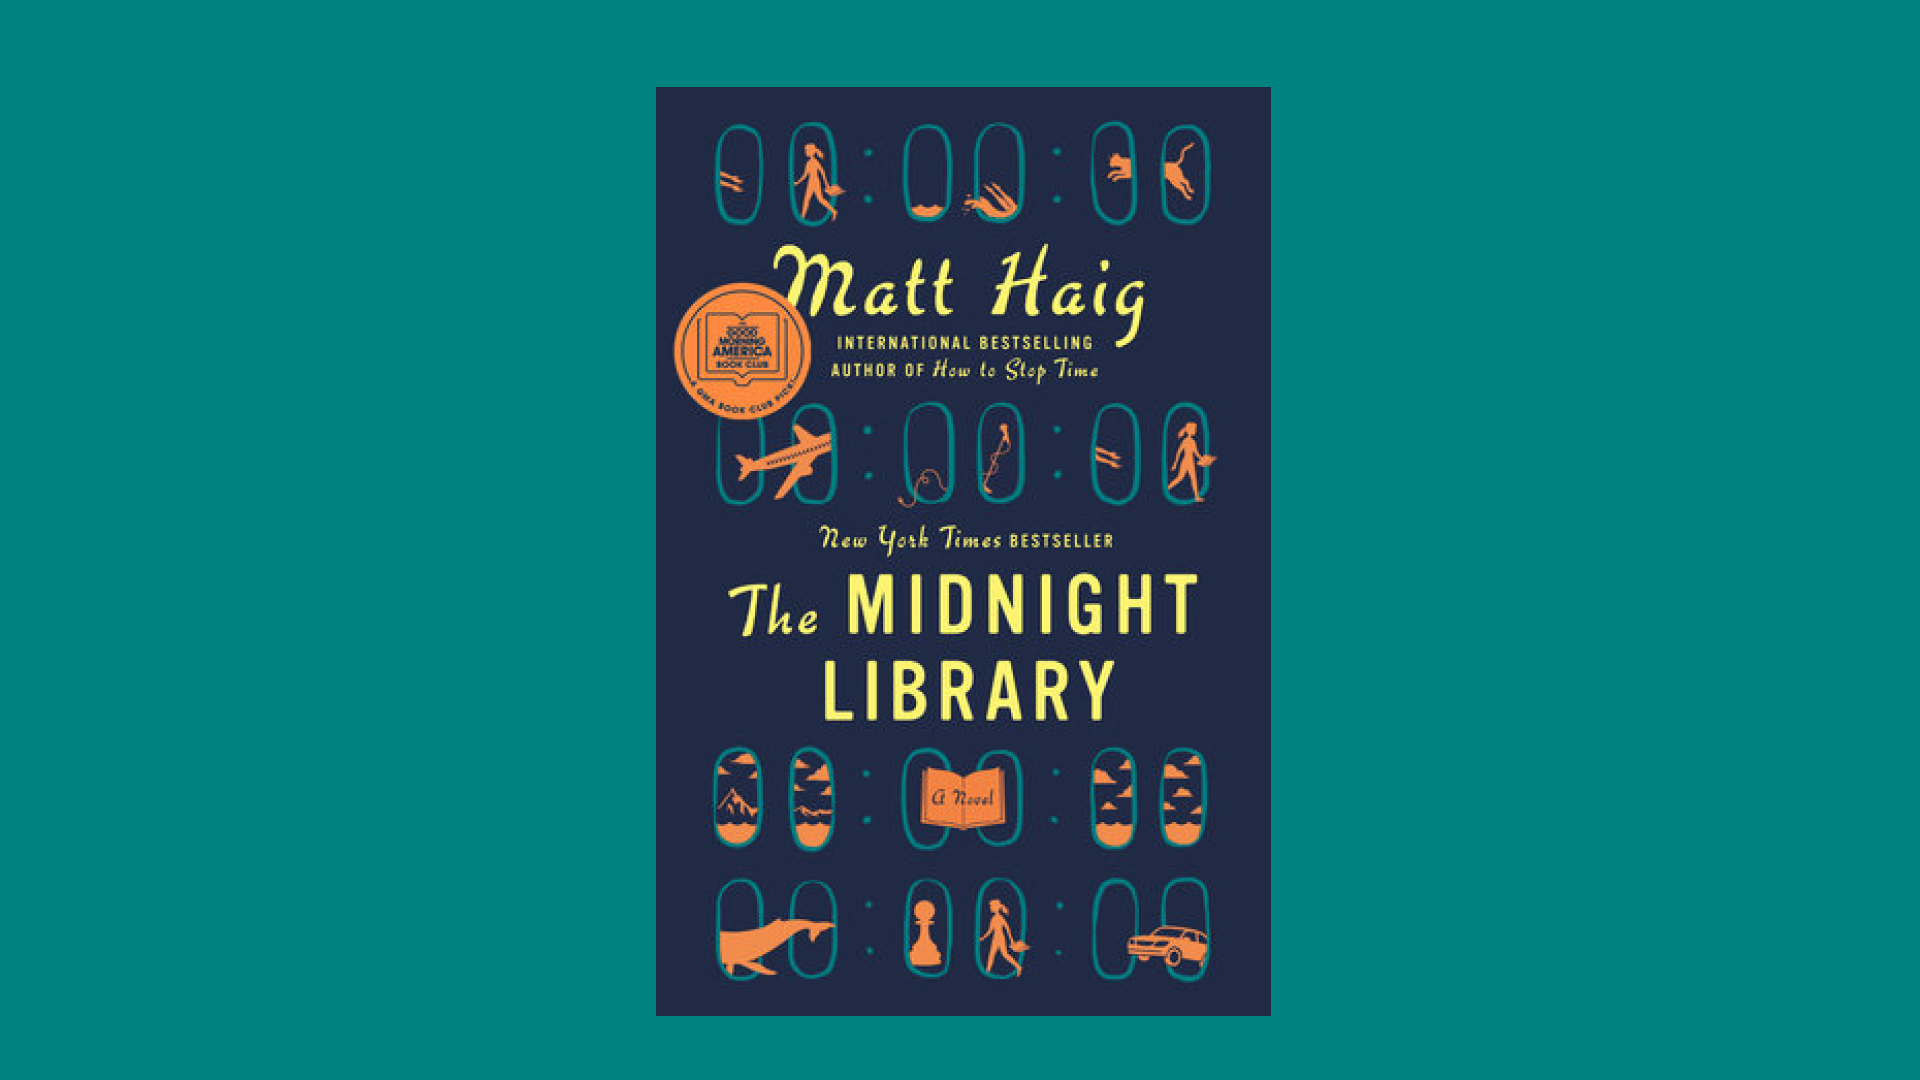 “The Midnight Library” by Matt Haig